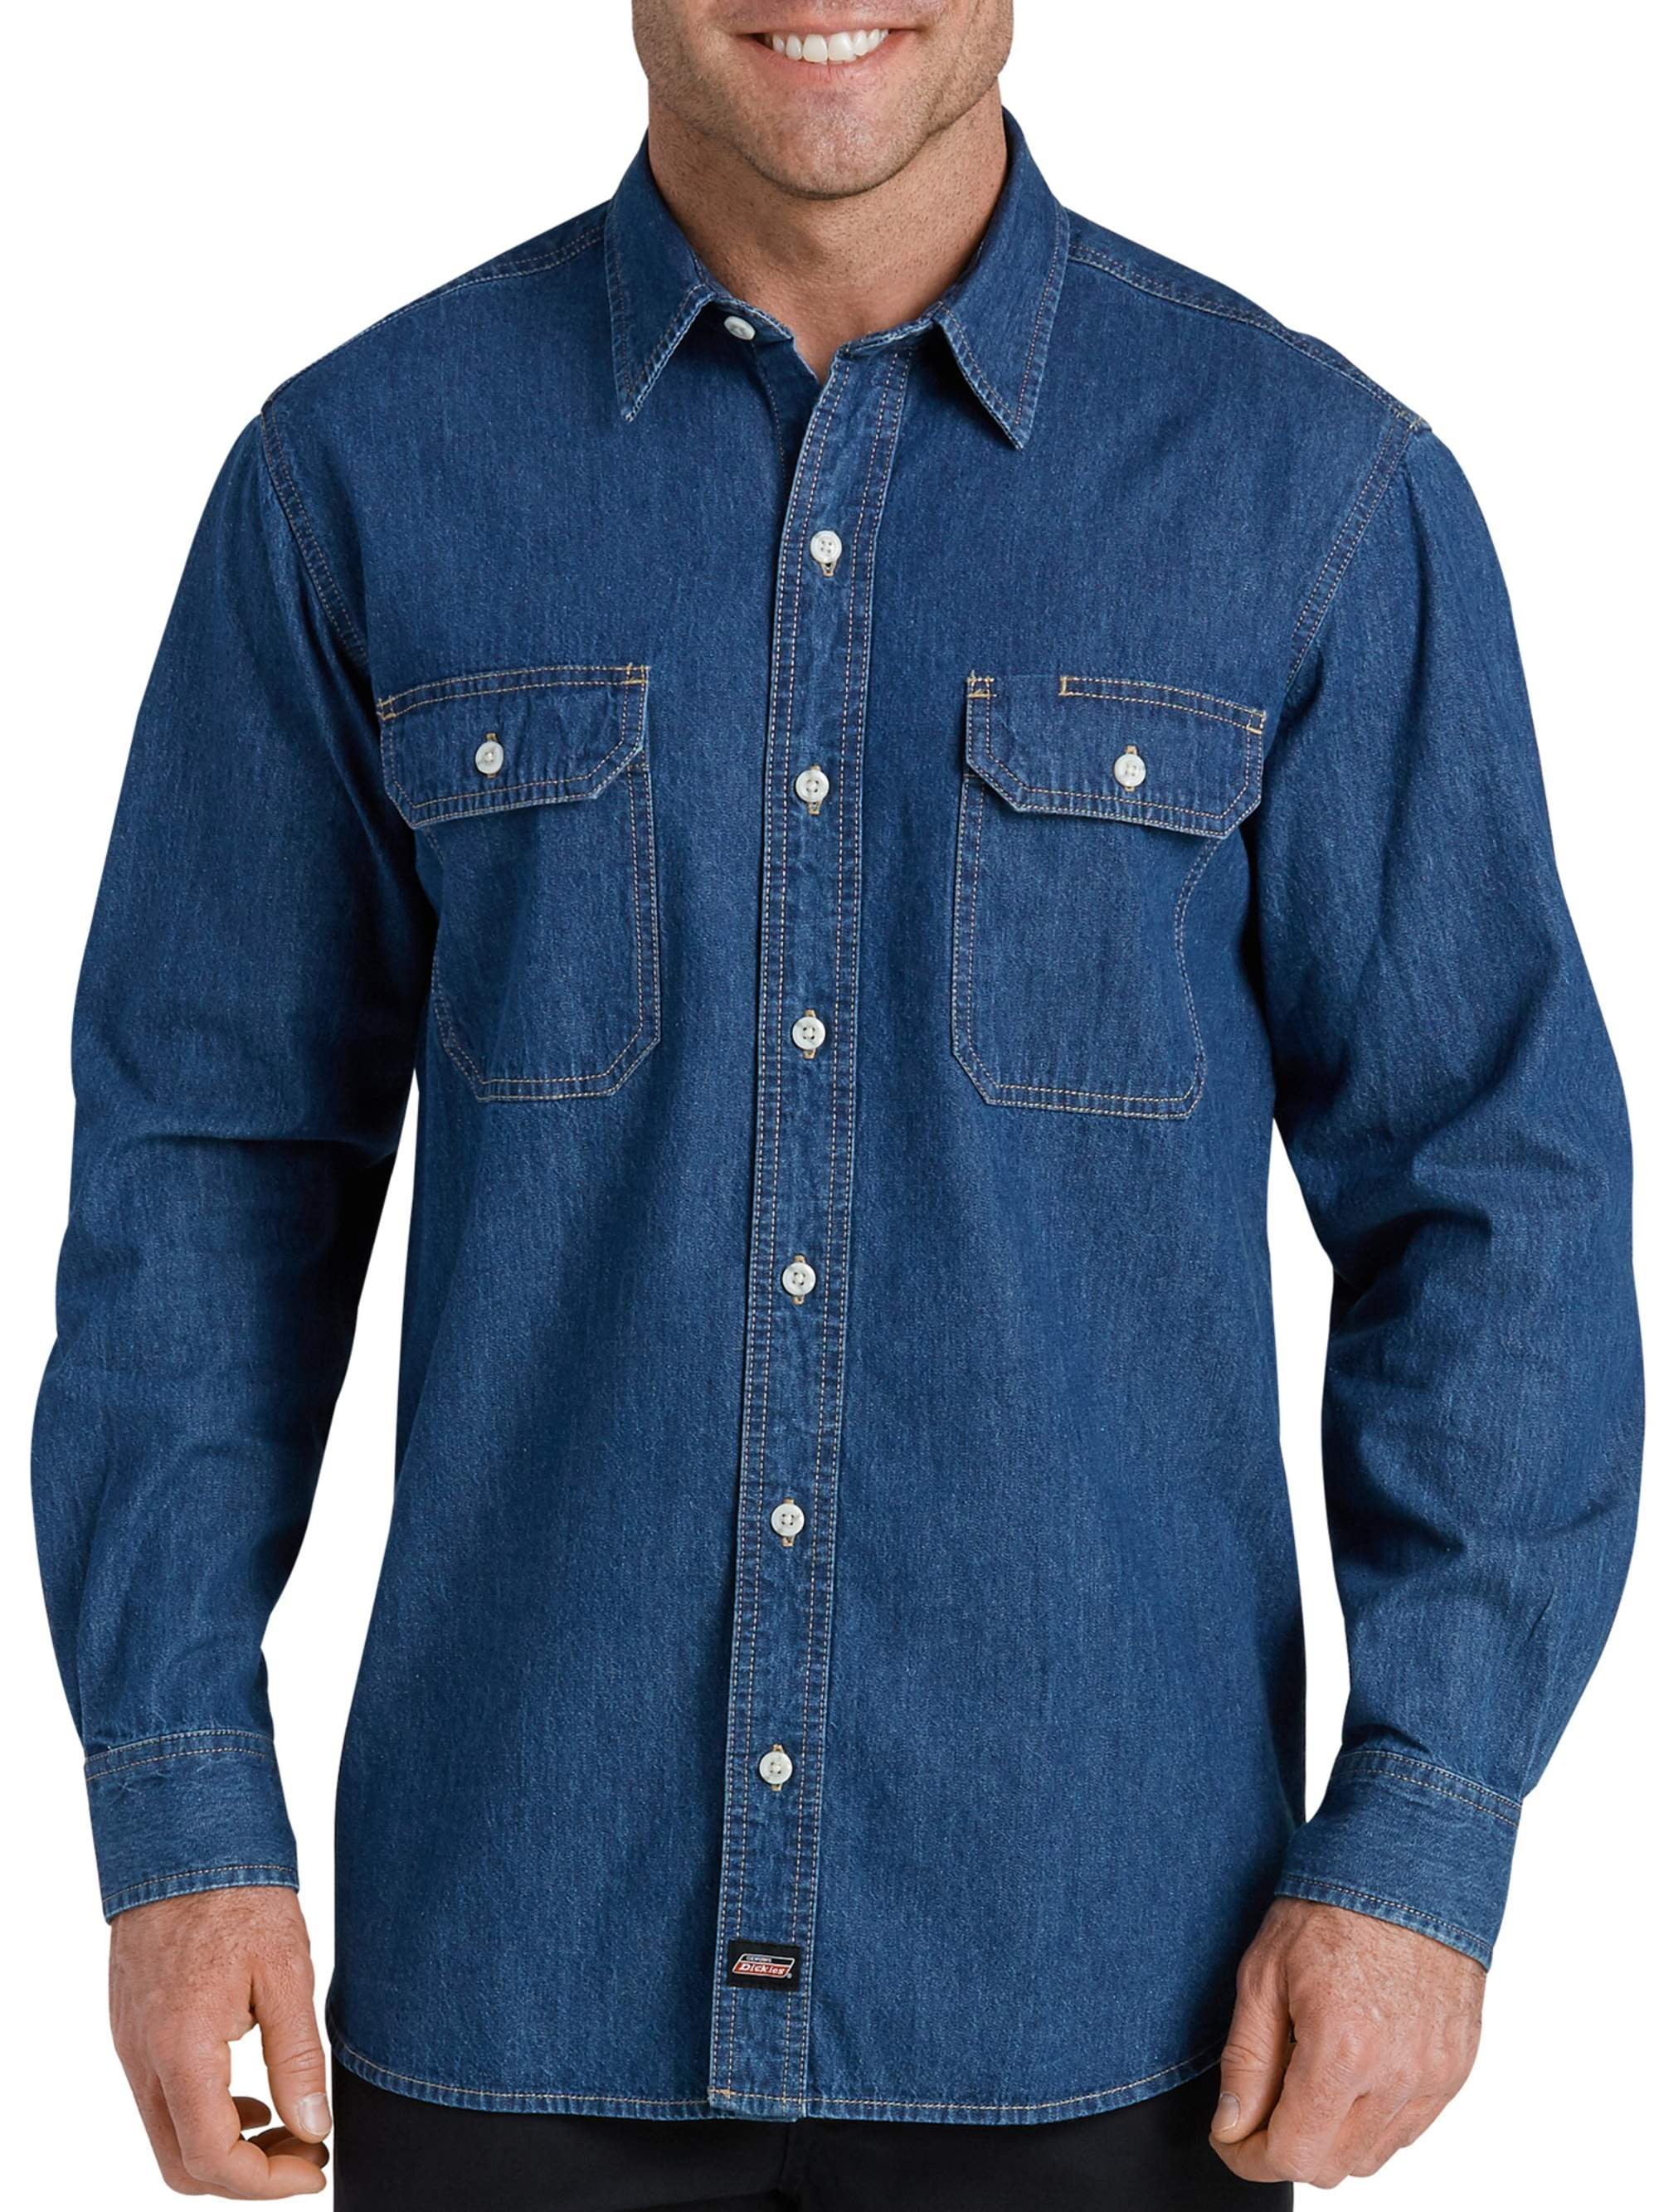 Mens denim shirt denim shirt long sleeve casual shirt jeans shell 100% cotton 